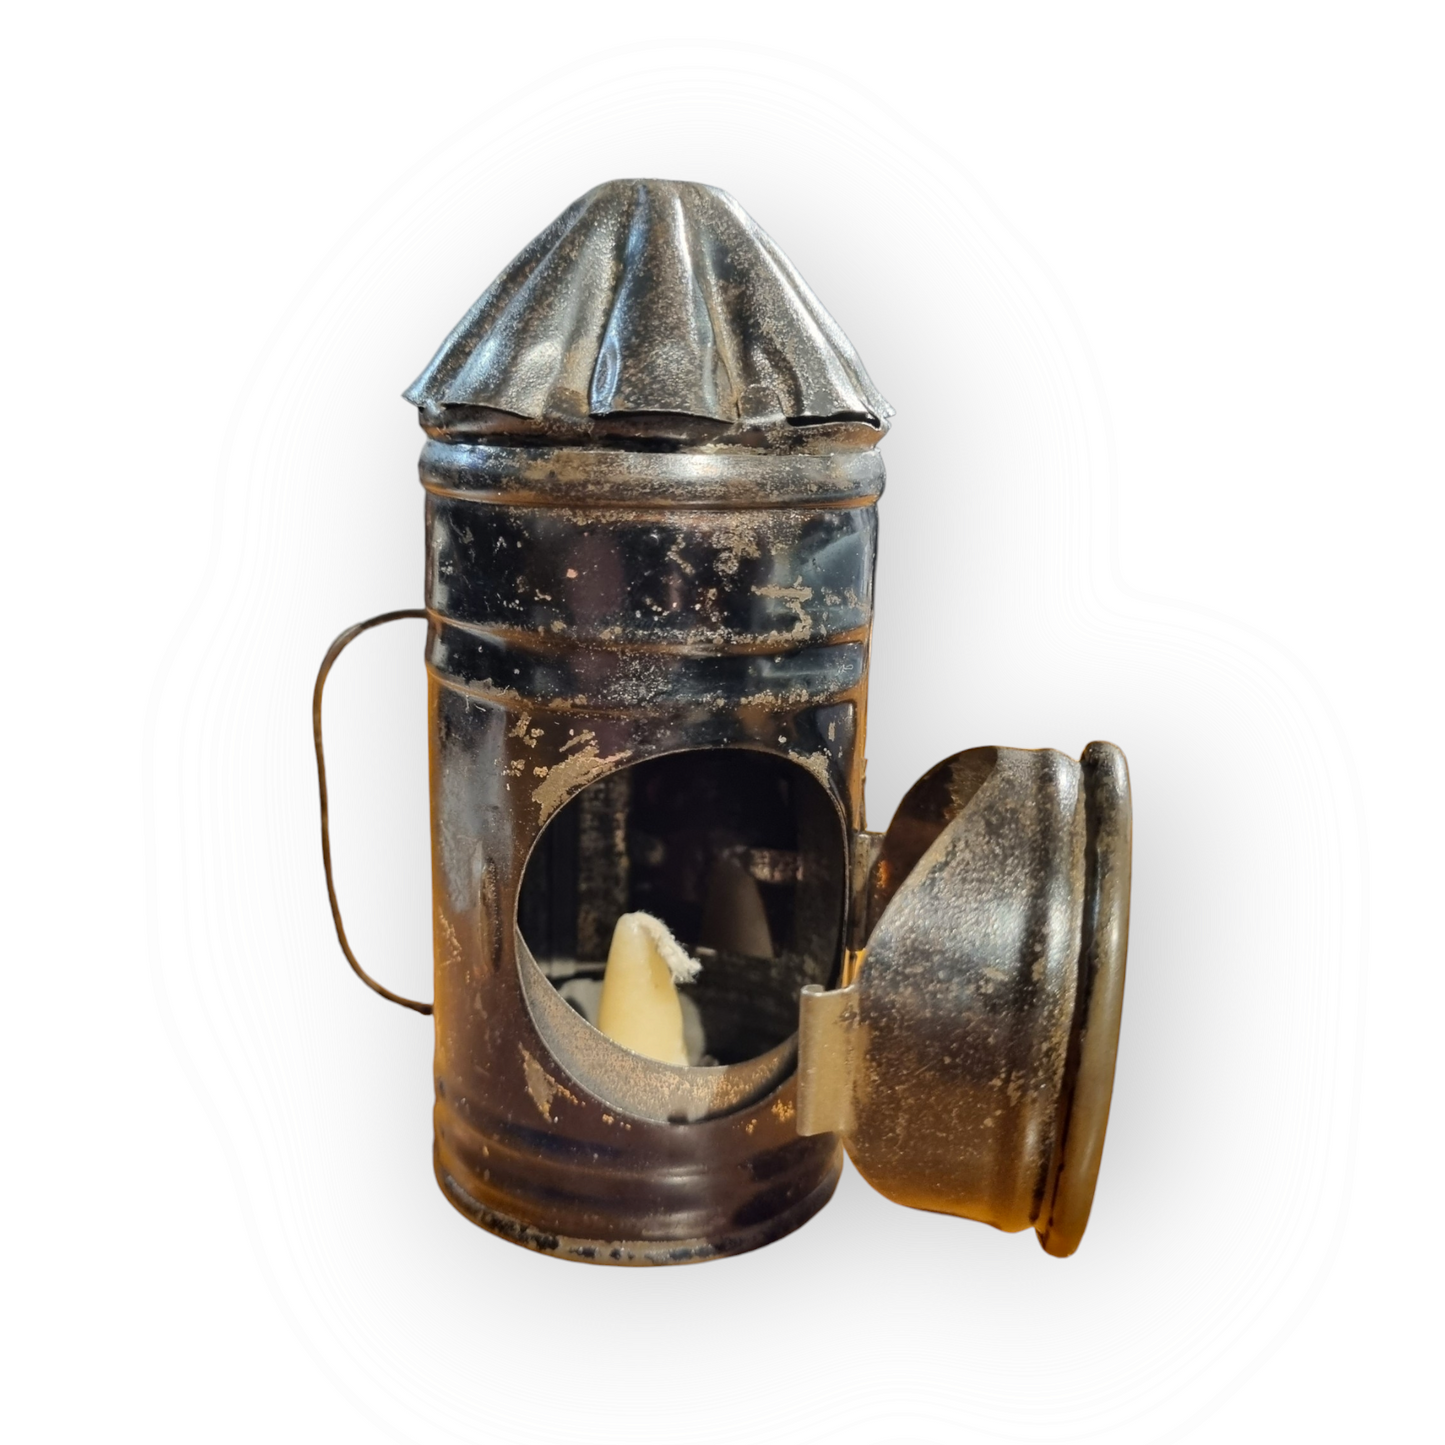 A Diminutive 19thC English Antique Toleware Child's Candle Lantern